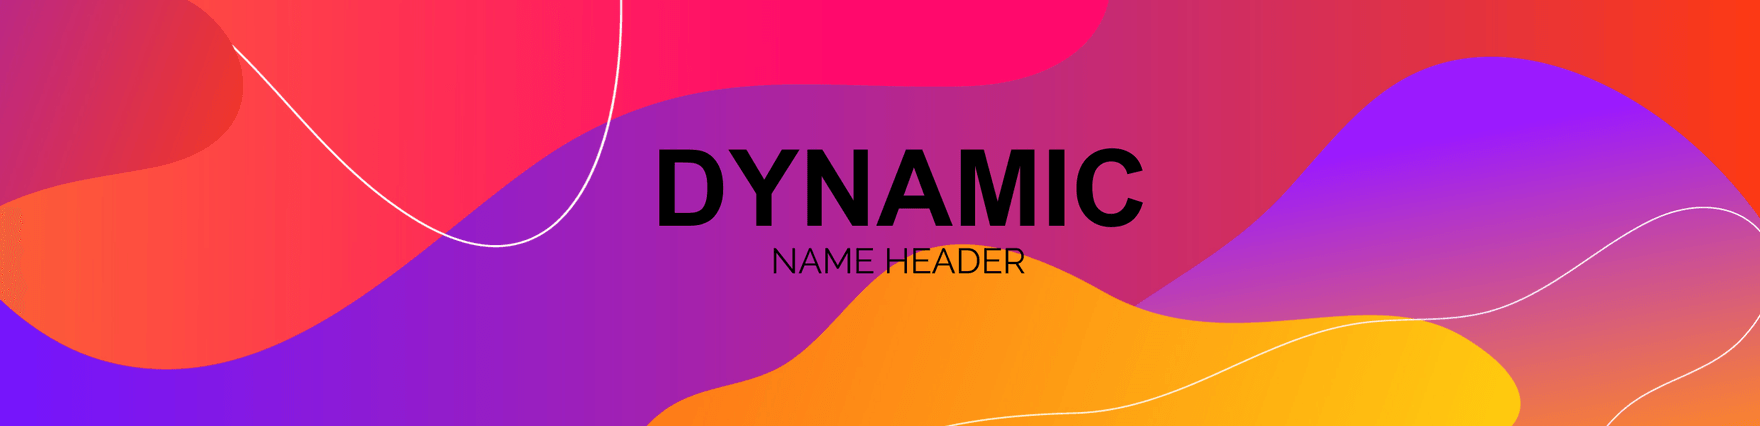 Free Dynamic Name Header Template